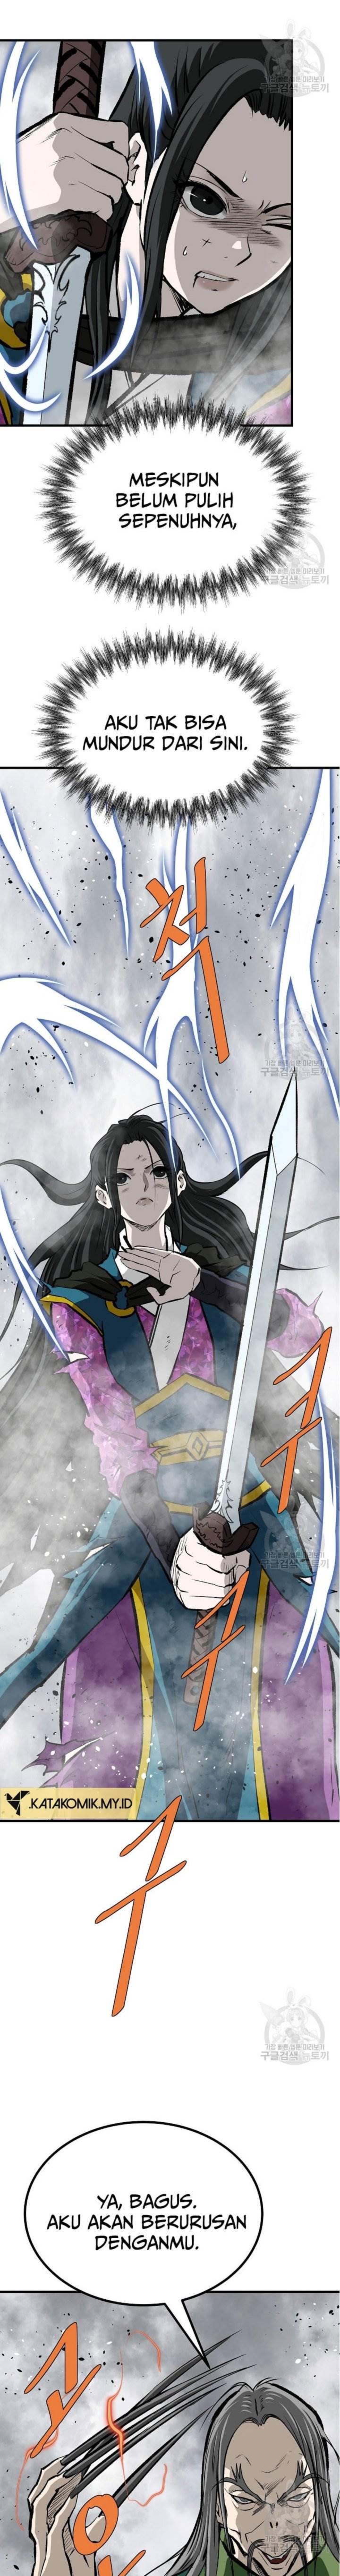 Archer Sword God: Descendants of the Archer Chapter 82